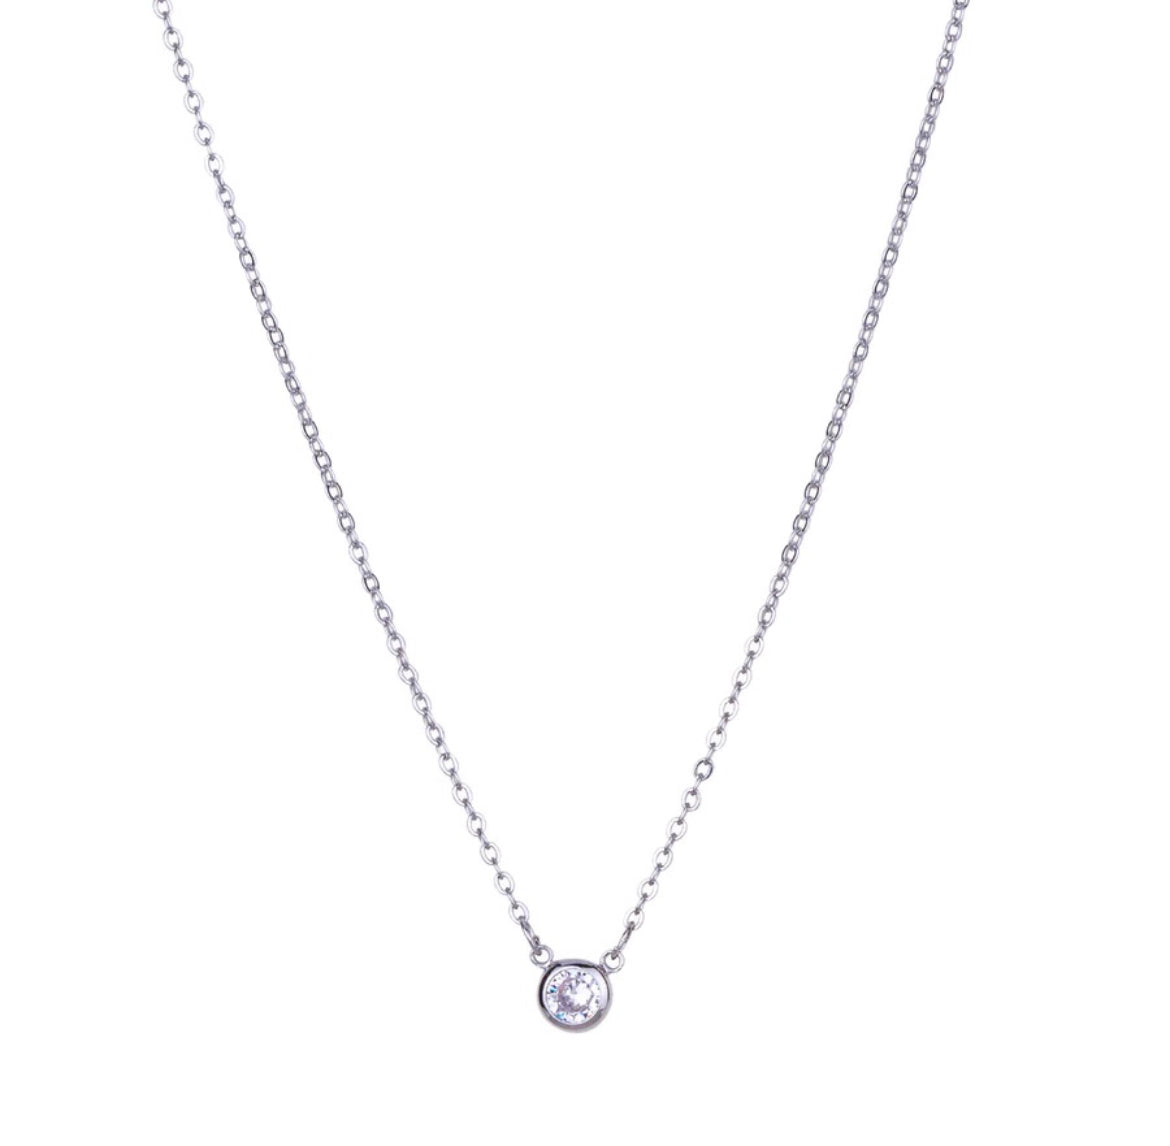 Bansri - Sparkling Swarovski Dainty Crystal Pendant Necklace - 18k White Gold Vermeil